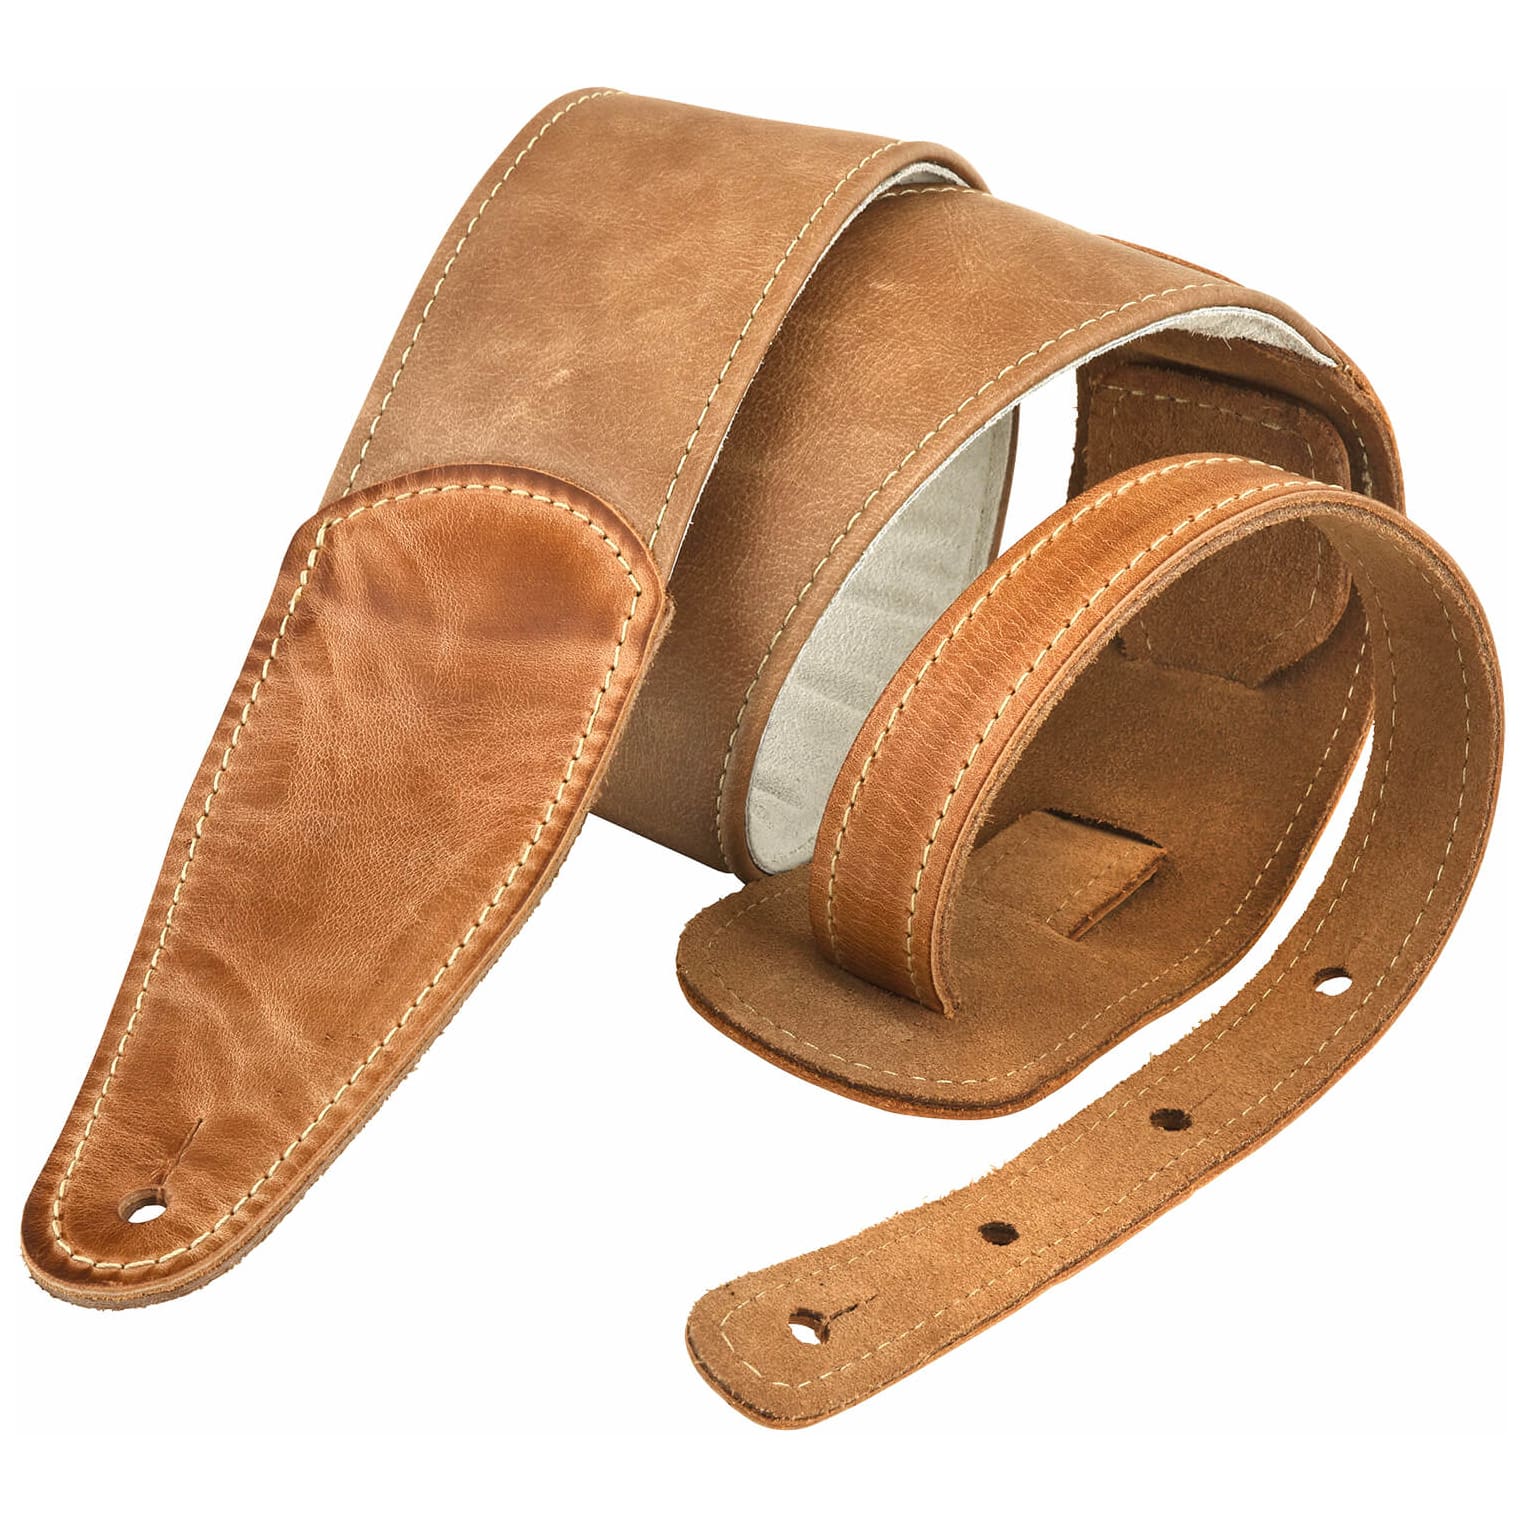 Session leather belt padded light brown